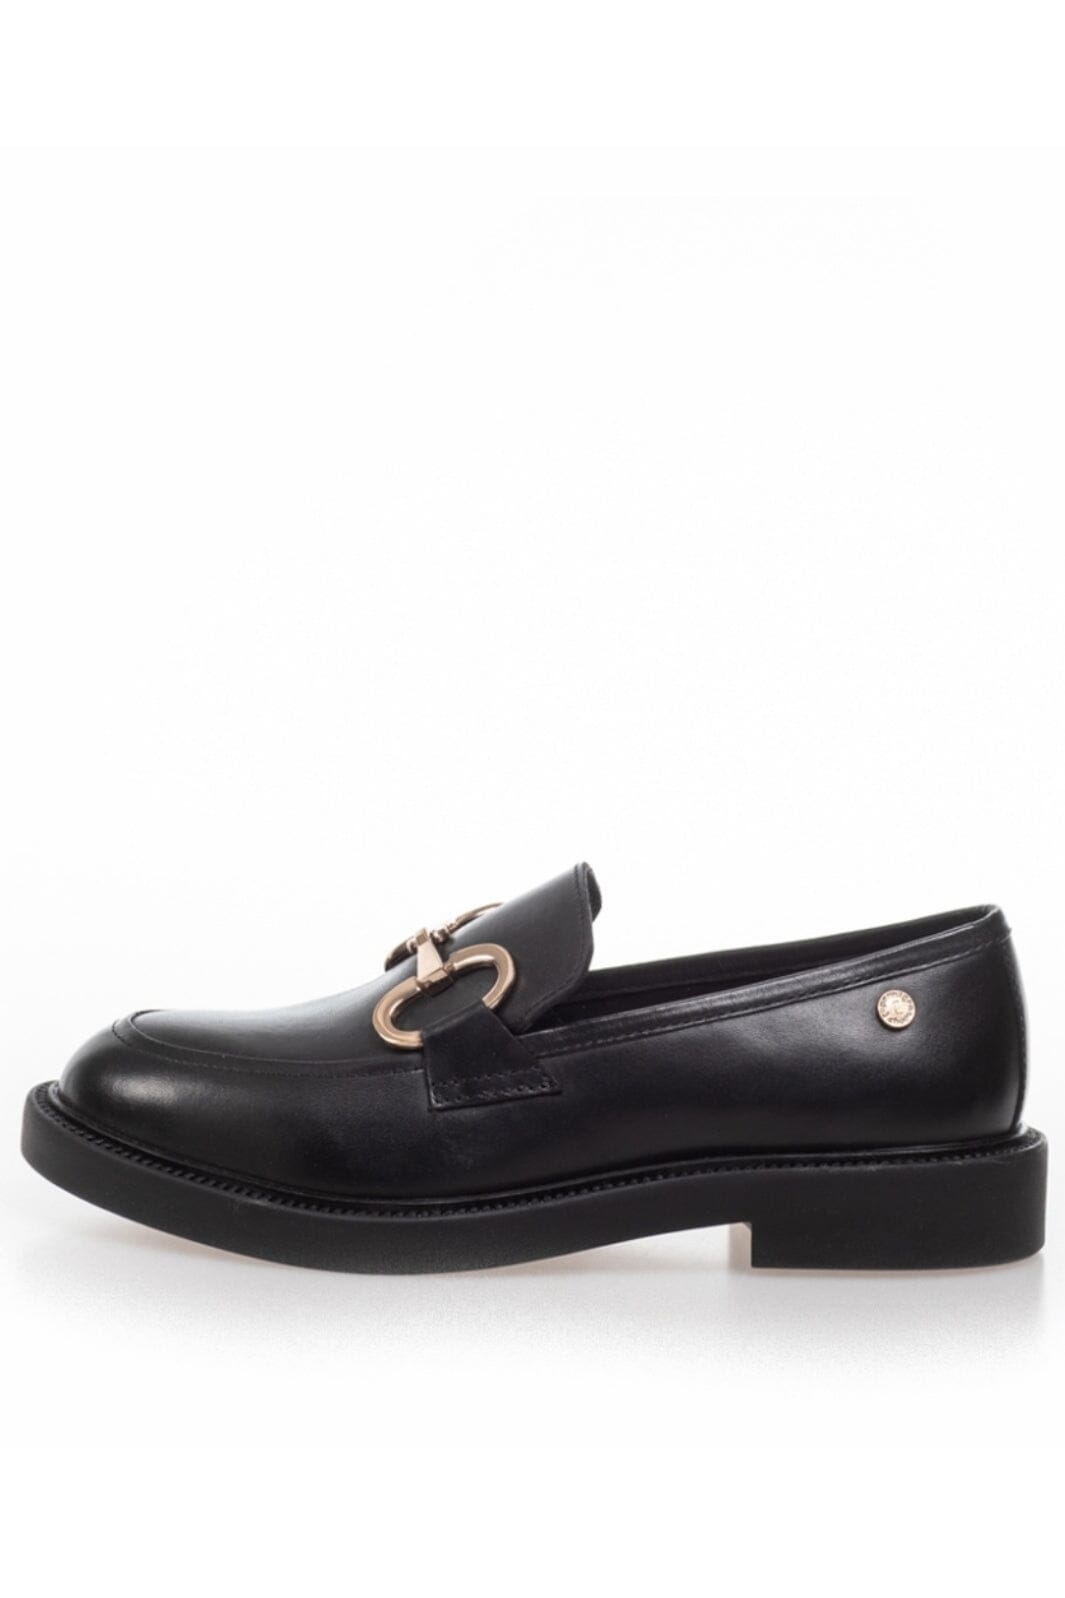 Copenhagen Shoes - Awake - Black Leather Loafers 